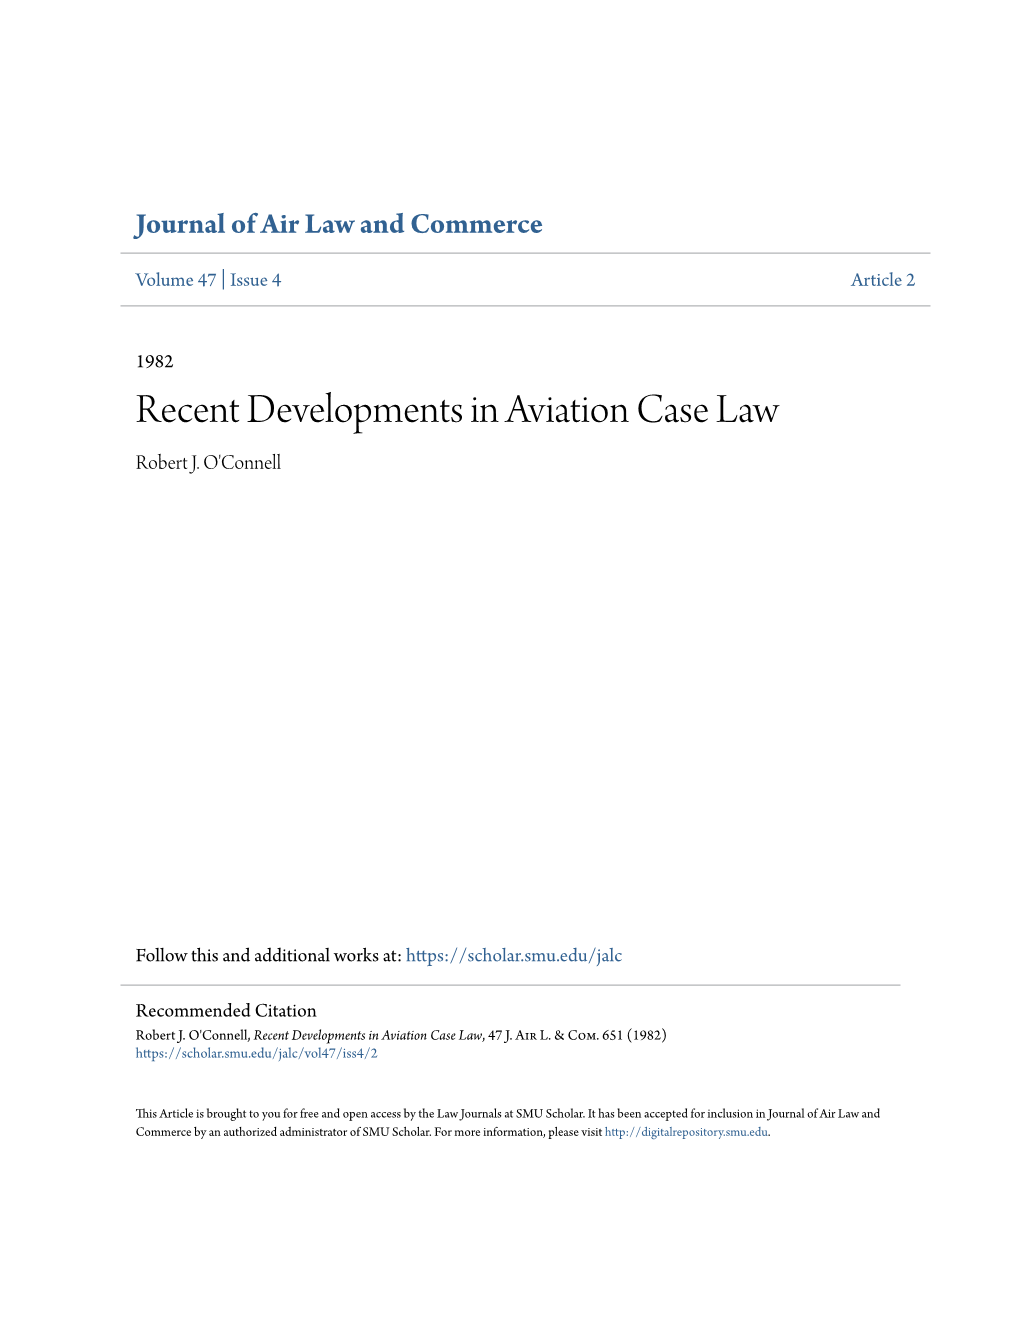 Recent Developments in Aviation Case Law Robert J